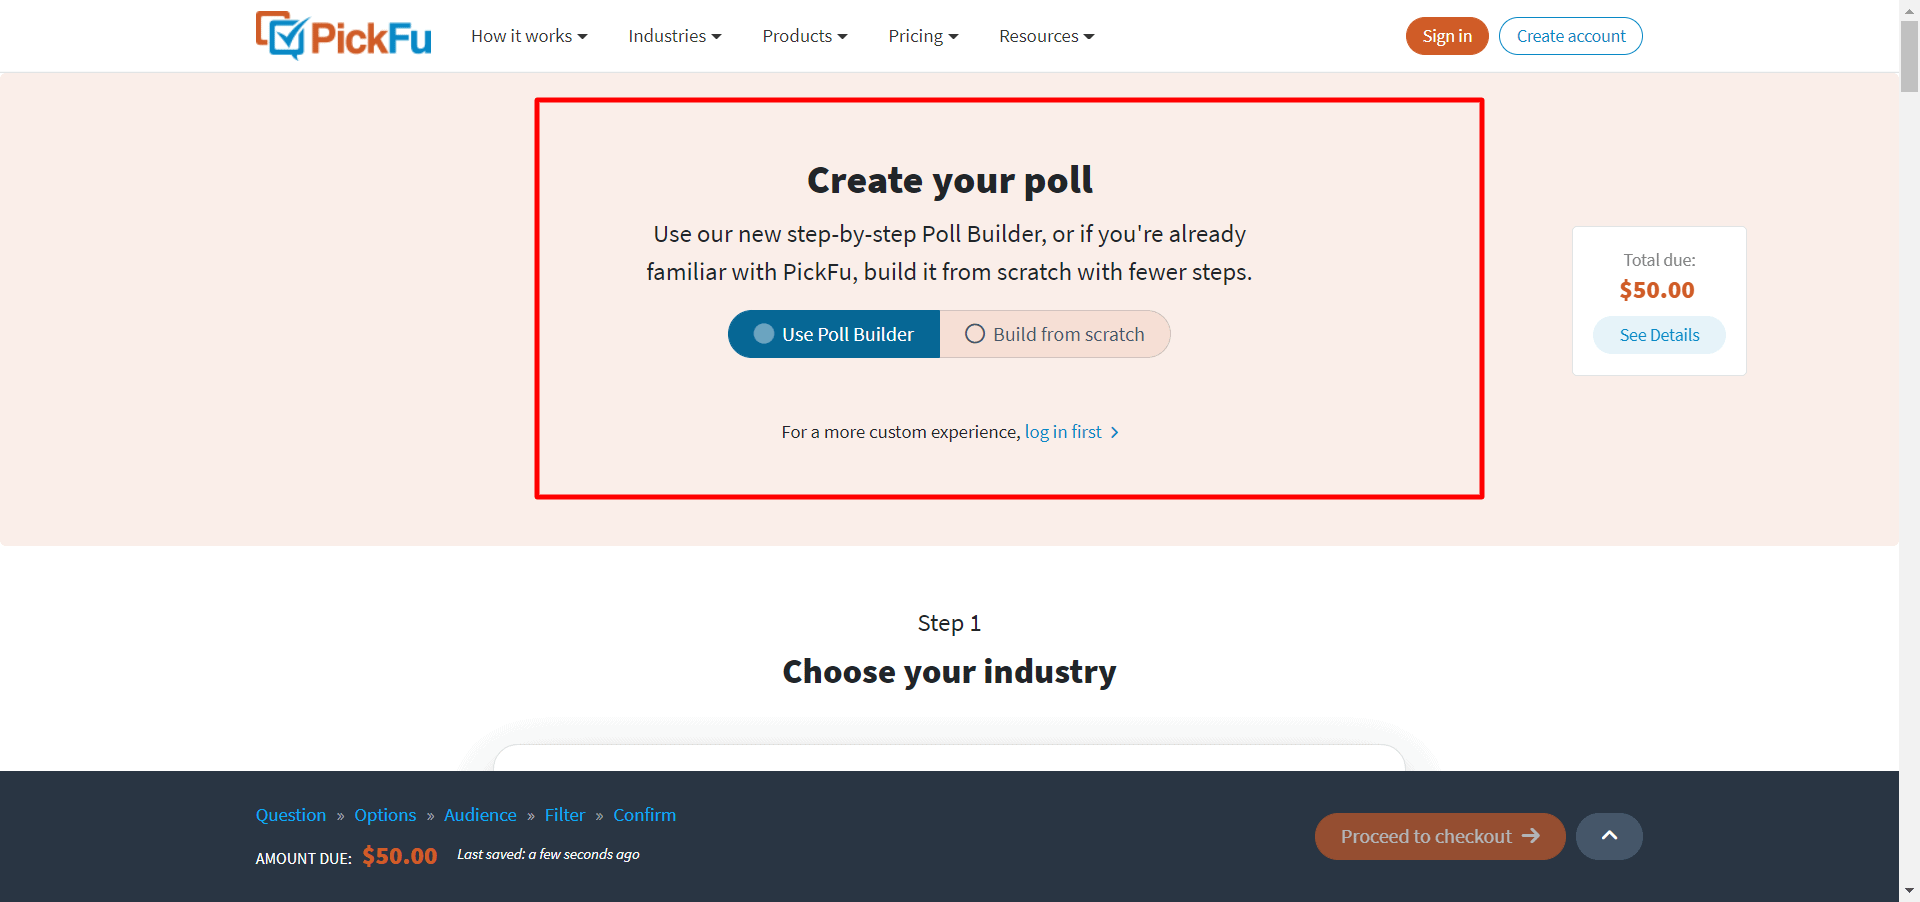 How to create poll on PickFu